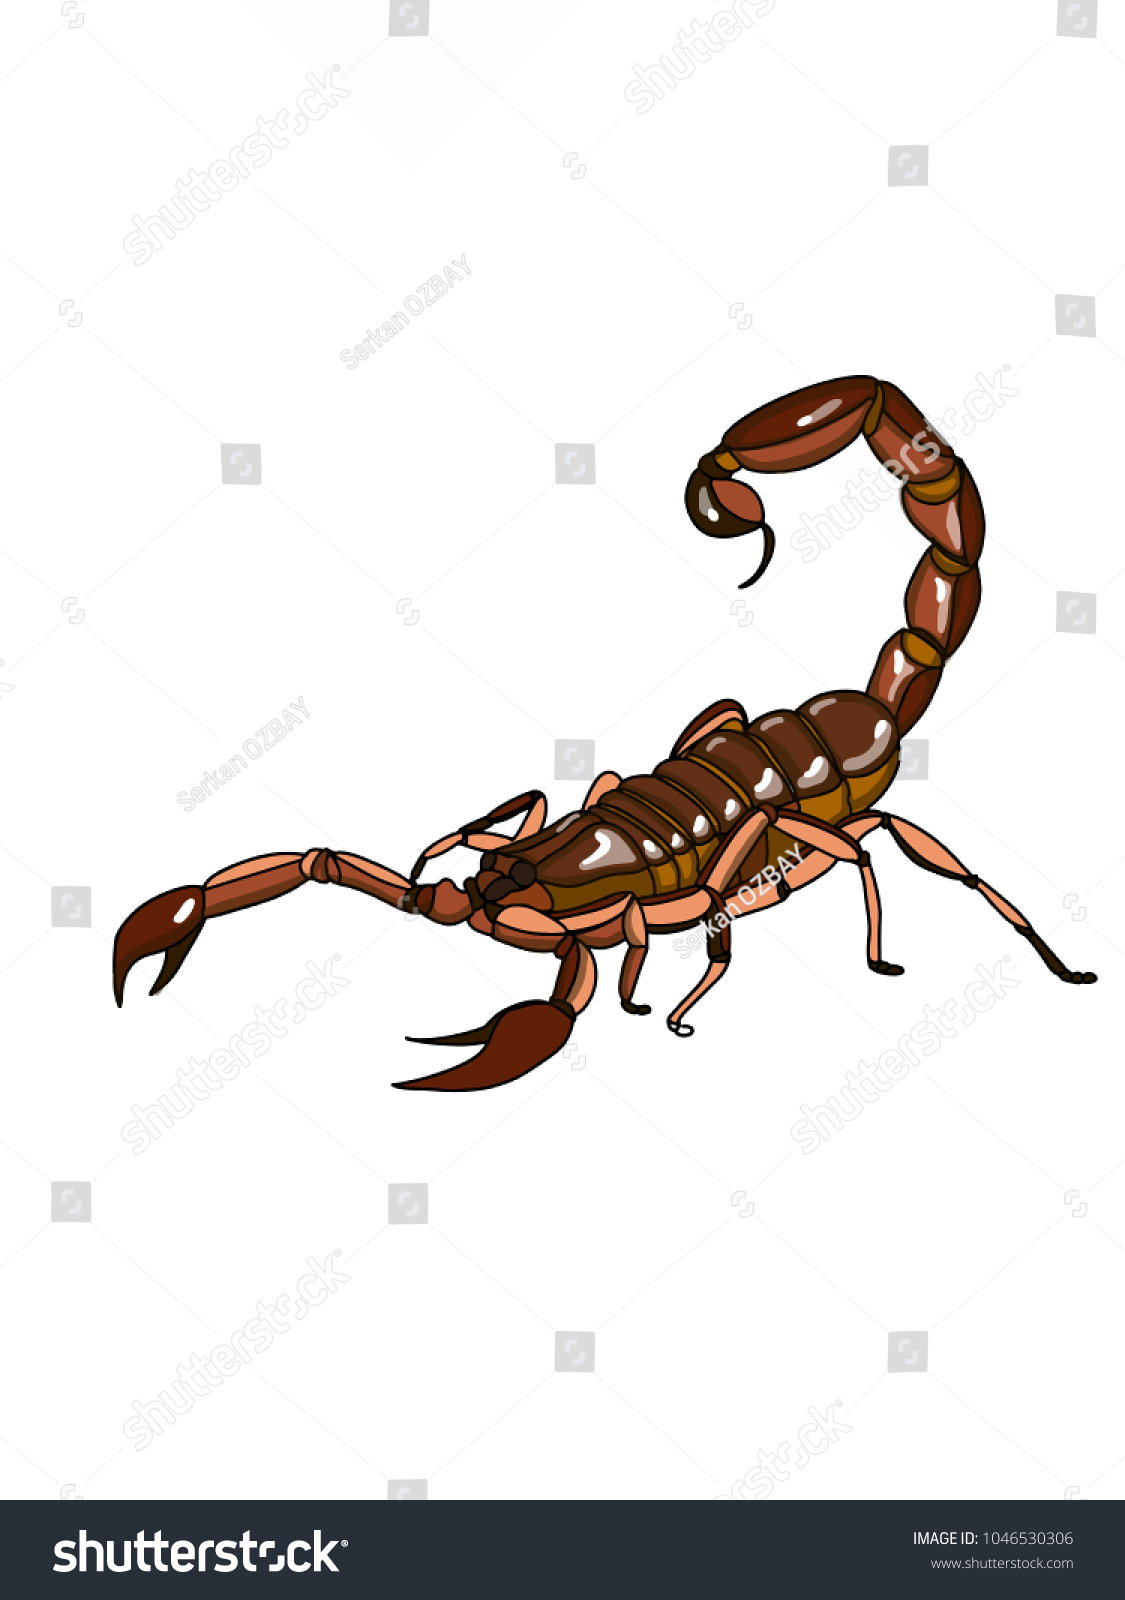 SVG of realistic scorpion cartoon illustration svg